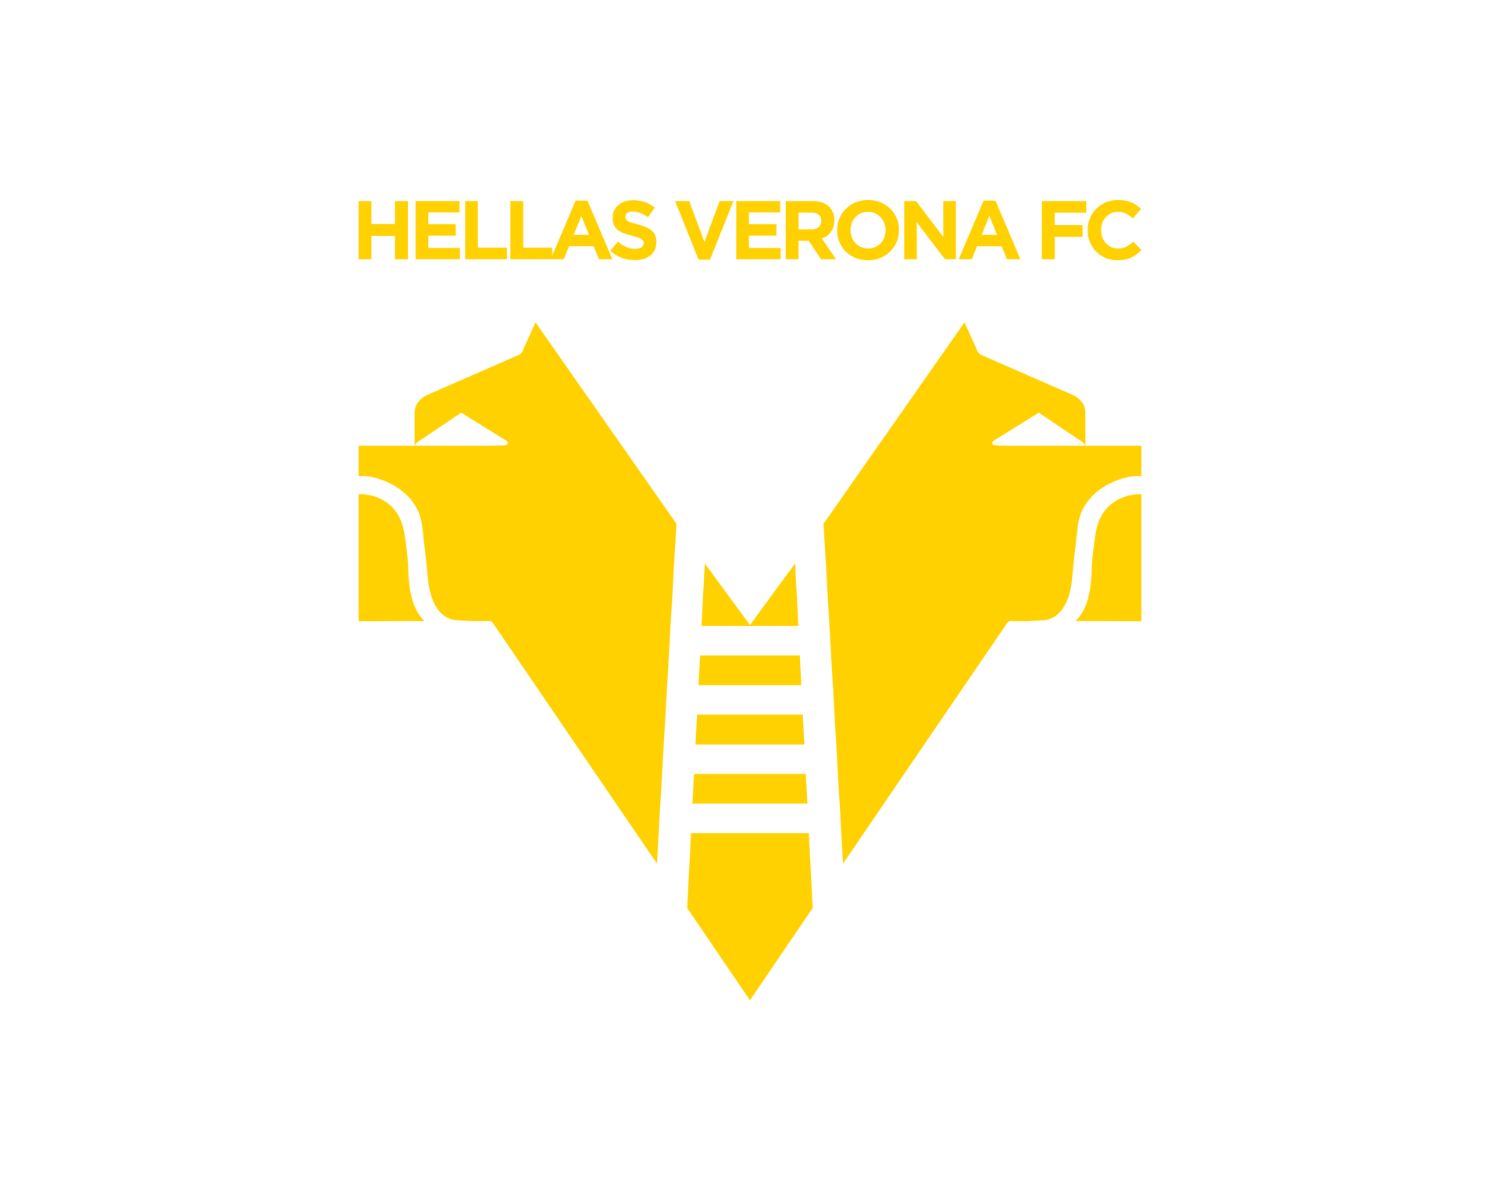 hellas-verona-fc-21-football-club-facts